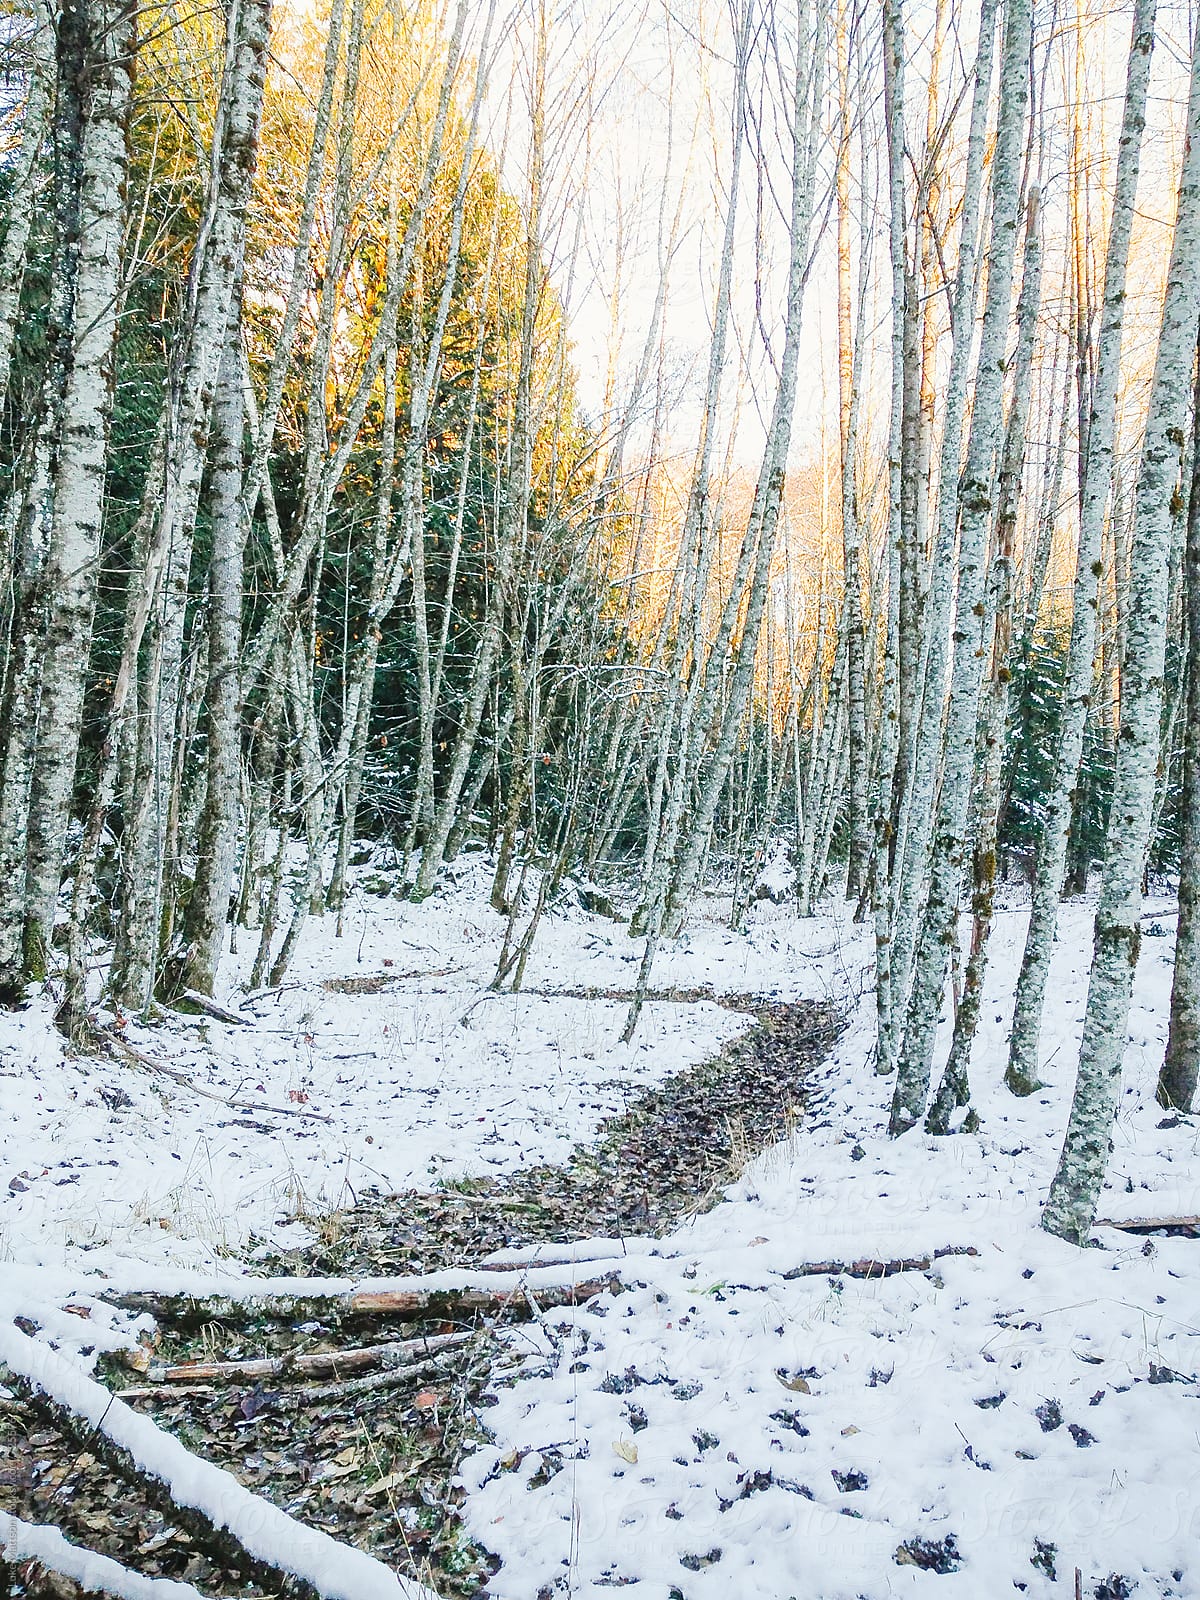 Winding Path Through Birch Trees In Winter With Snow On Ground By Luke Mattson Path Winter Stocksy United